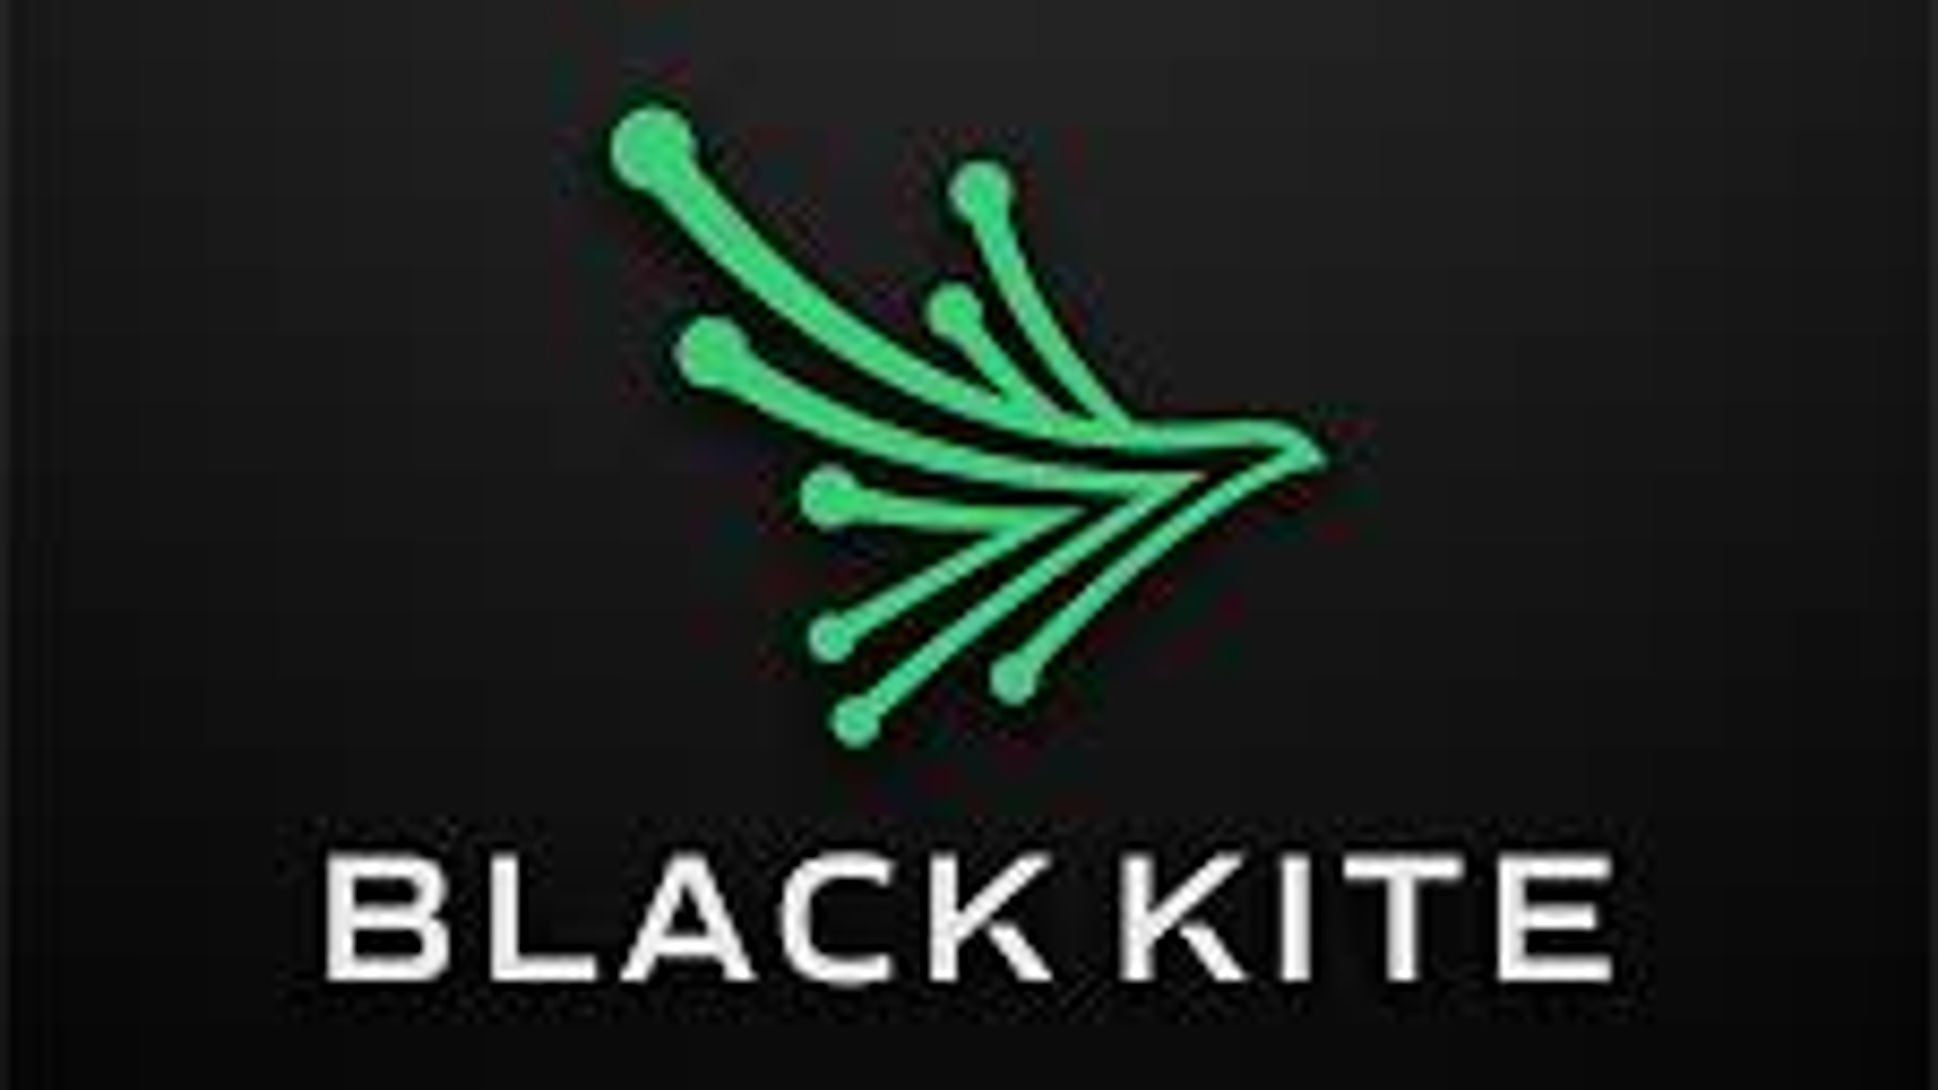 Black Kite Overview